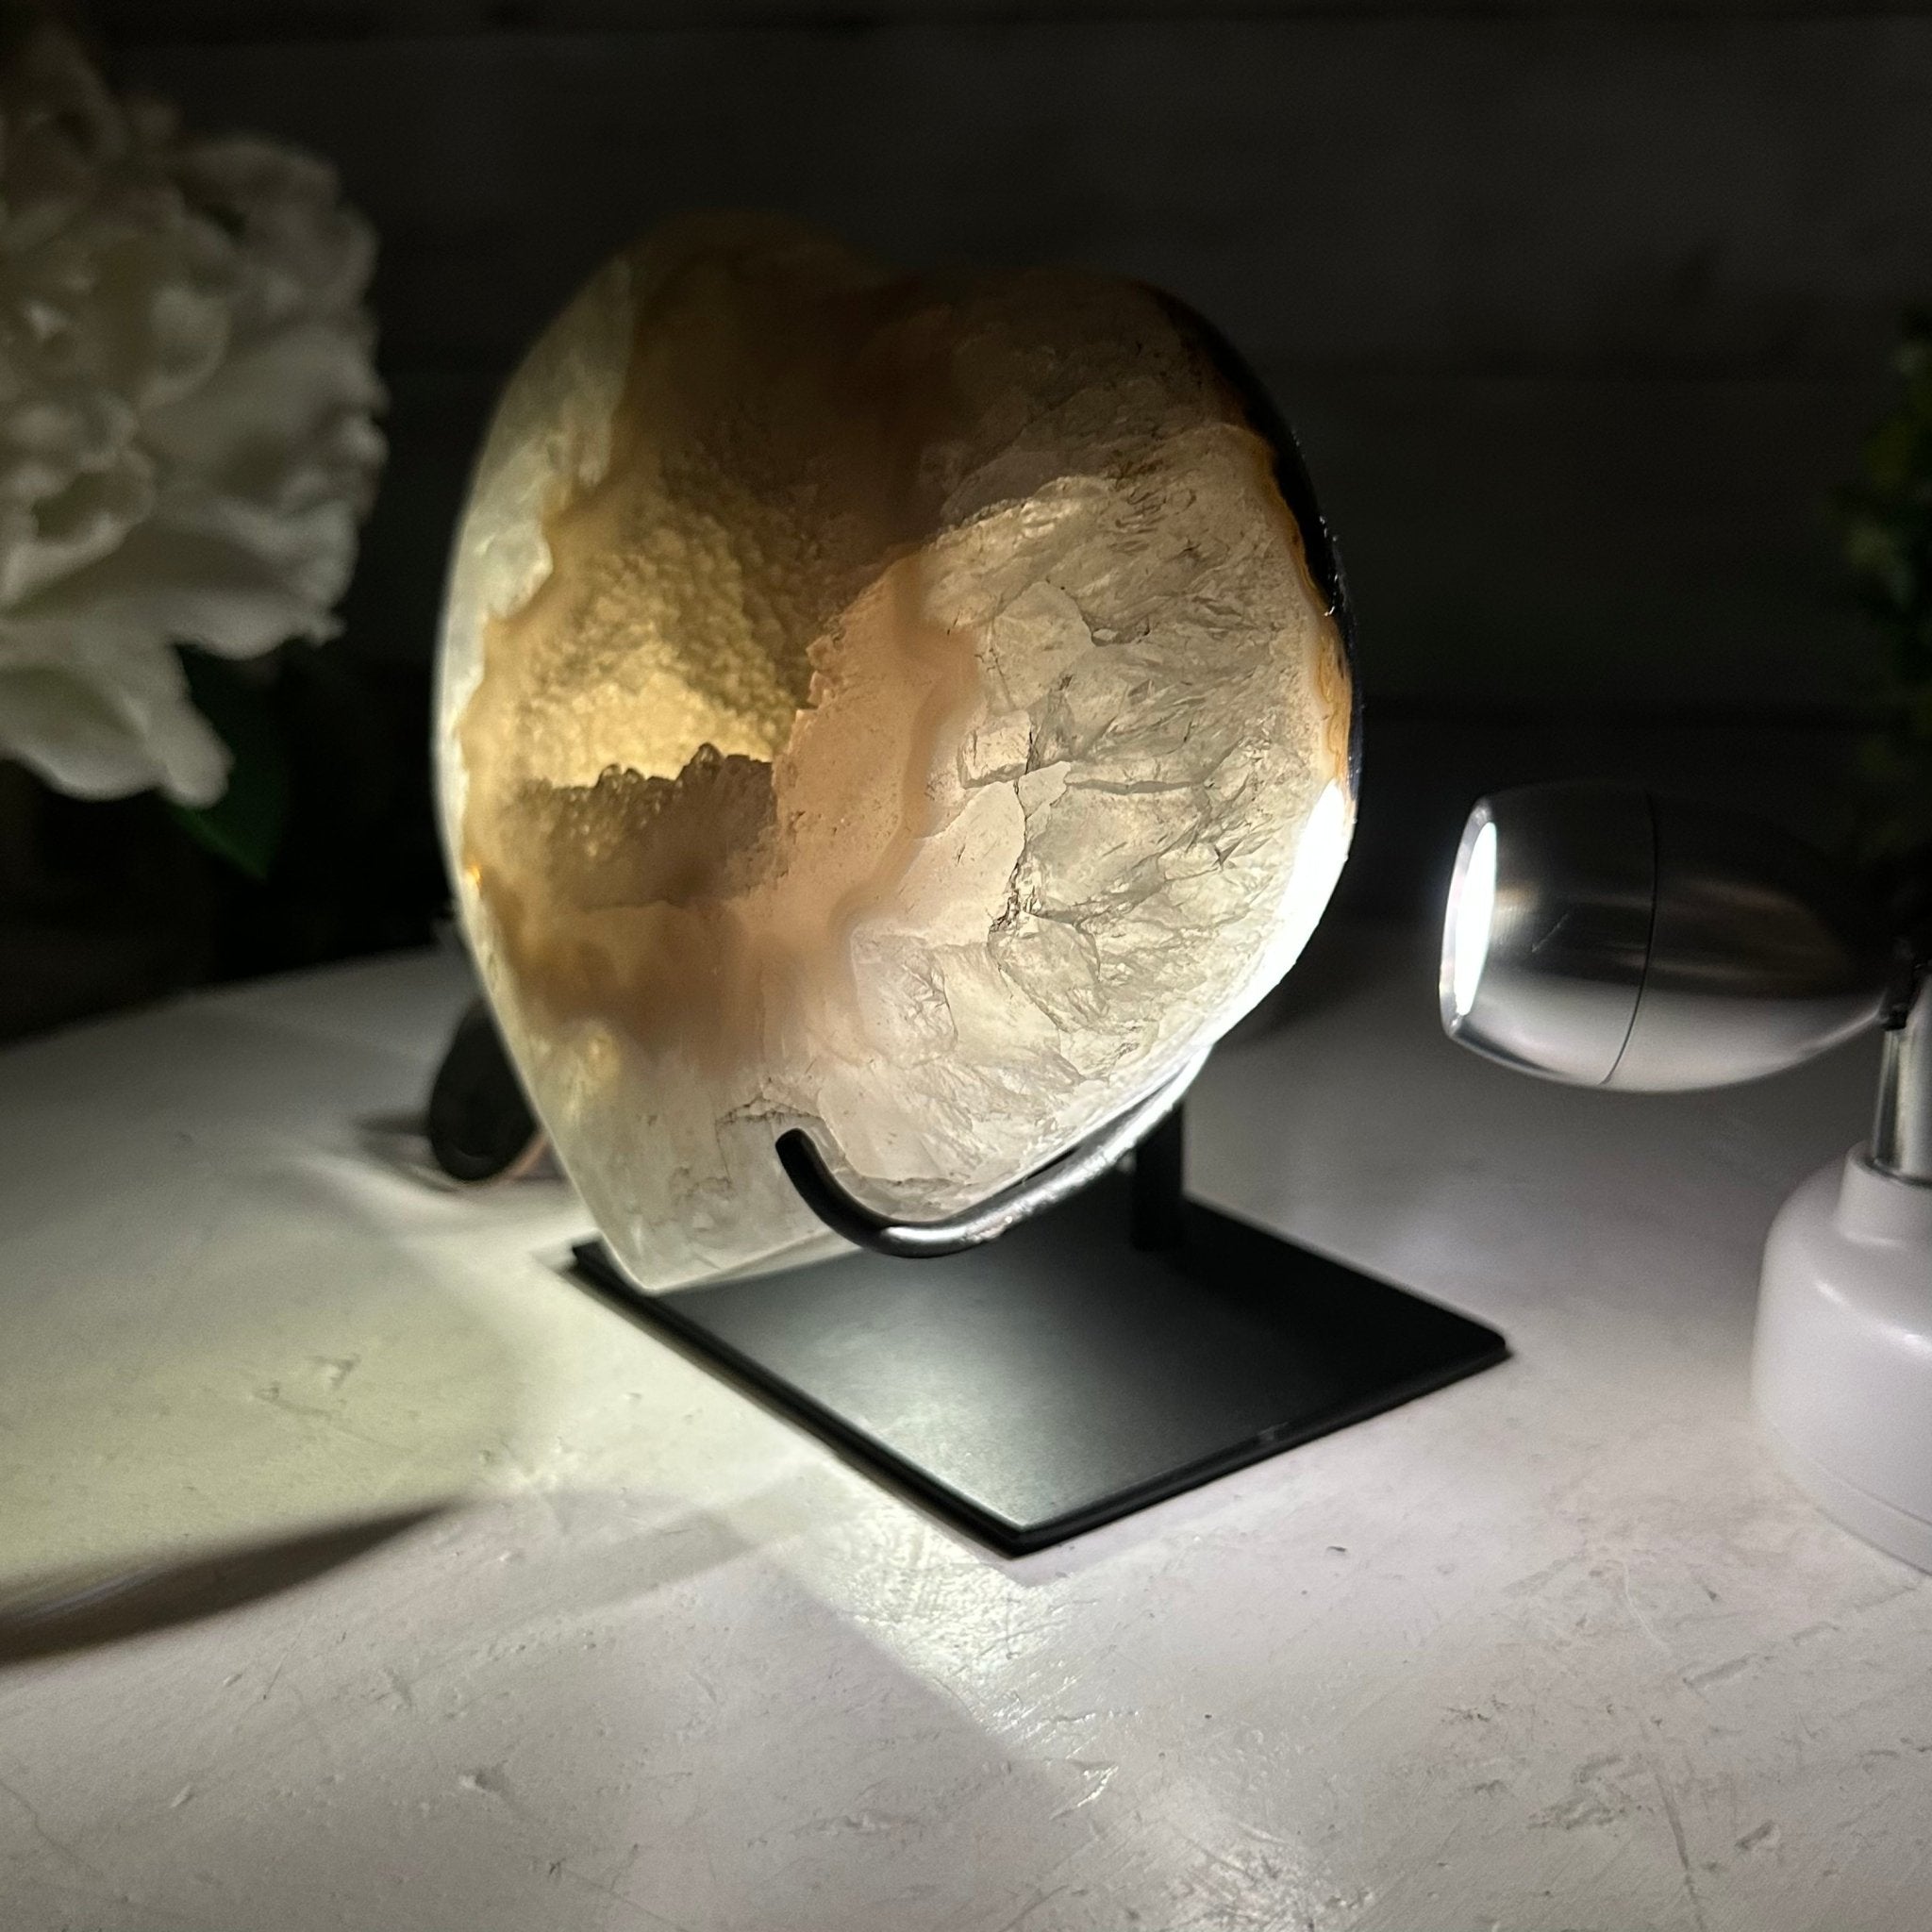 Polished Agate Heart Geode on a Metal Stand, 2.7 lbs & 4.7" Tall, Model #5468-0043 by Brazil Gems - Brazil GemsBrazil GemsPolished Agate Heart Geode on a Metal Stand, 2.7 lbs & 4.7" Tall, Model #5468-0043 by Brazil GemsHearts5468-0043